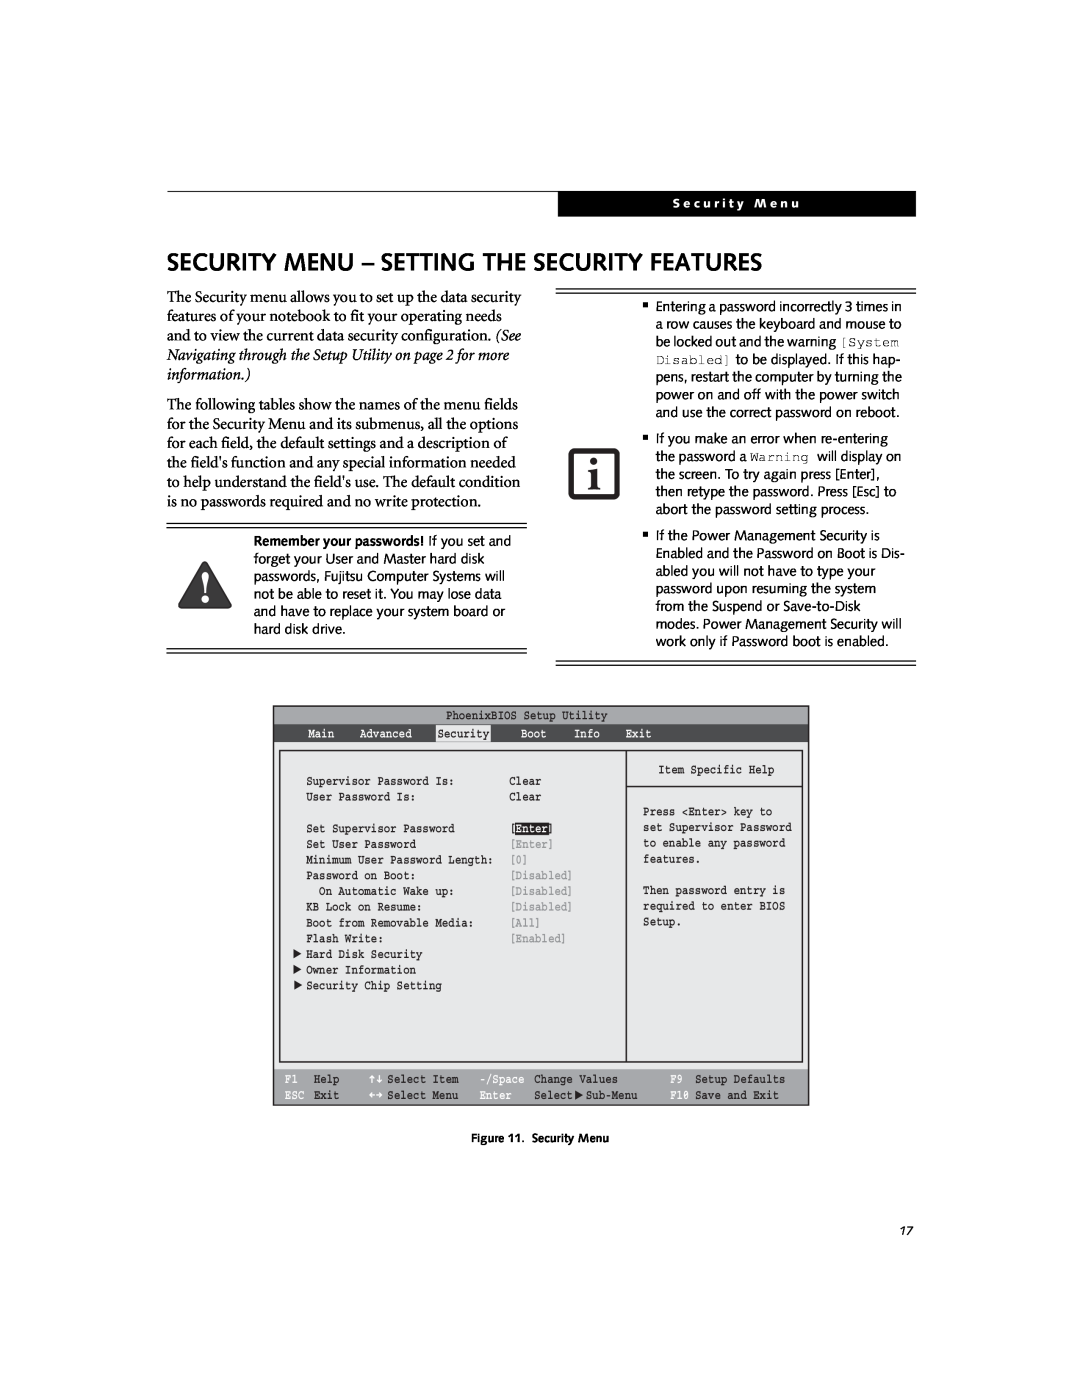 Fujitsu Q2010 manual Security Menu - Setting The Security Features, Enter 